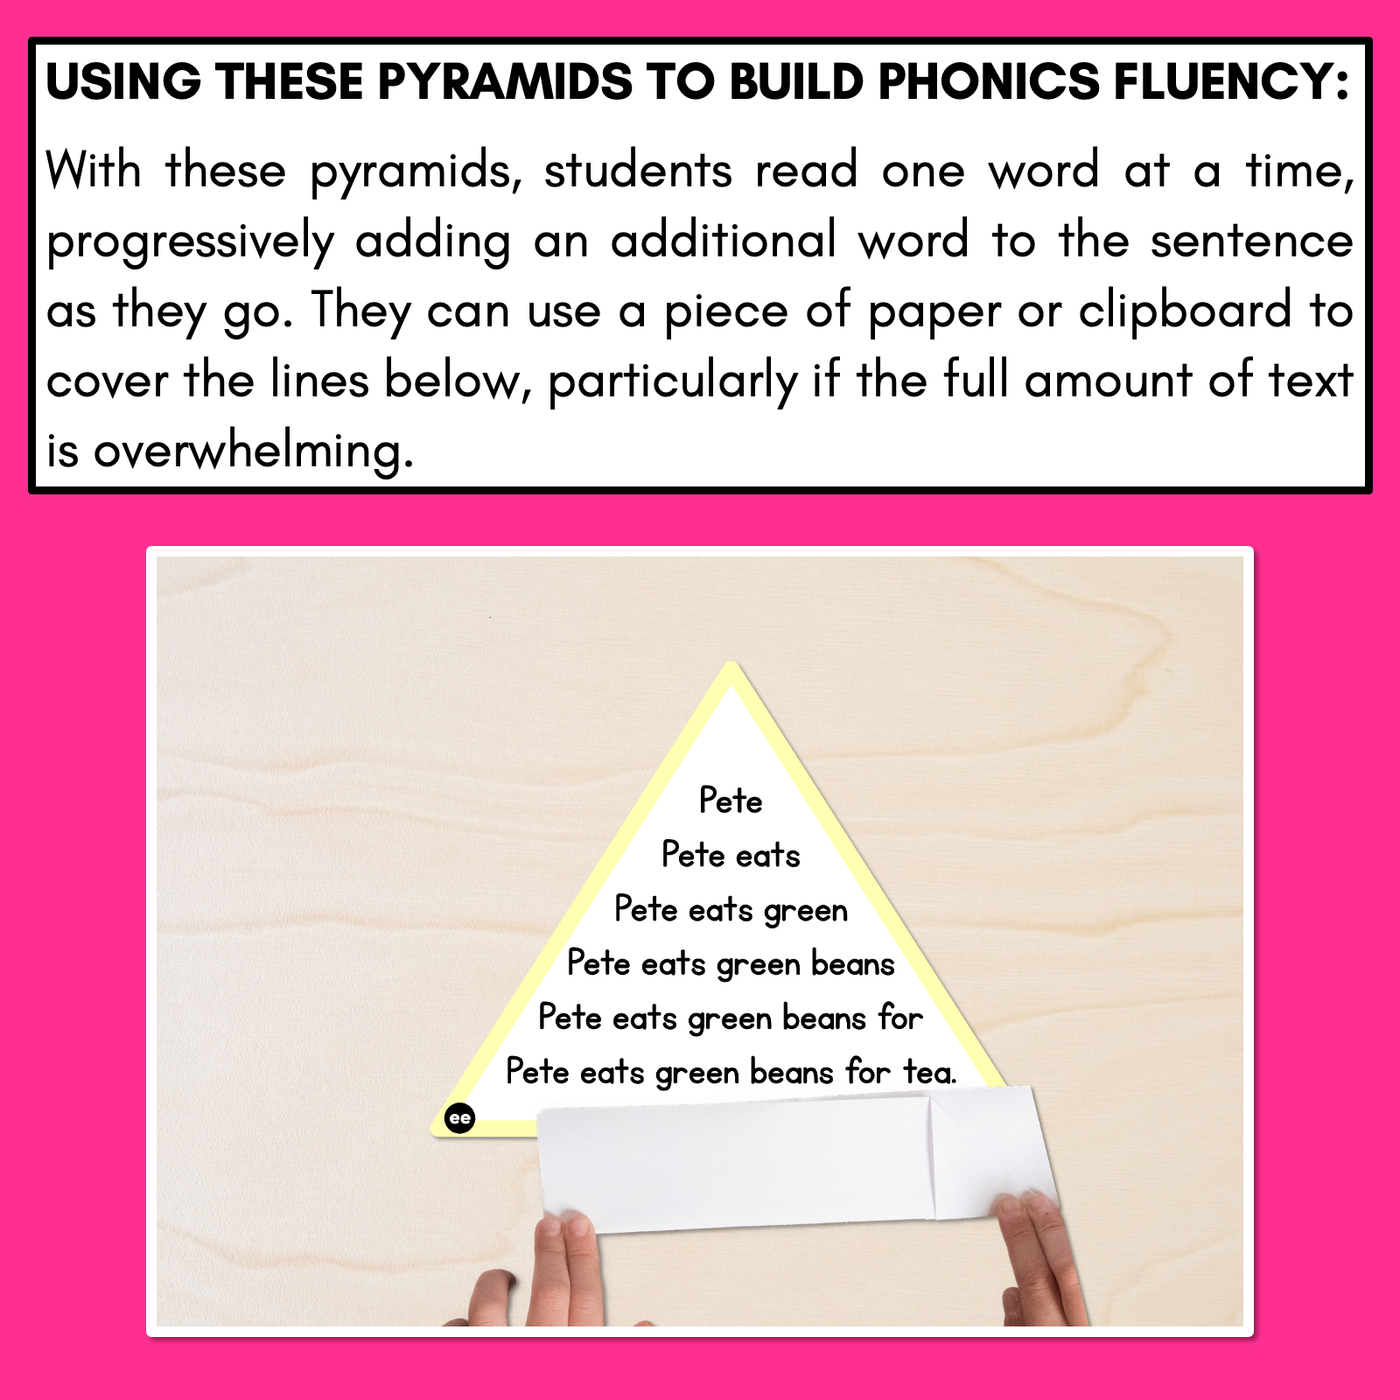 LONG VOWEL E WORDS - Decodable Sentences Pyramids - Phonics Fluency